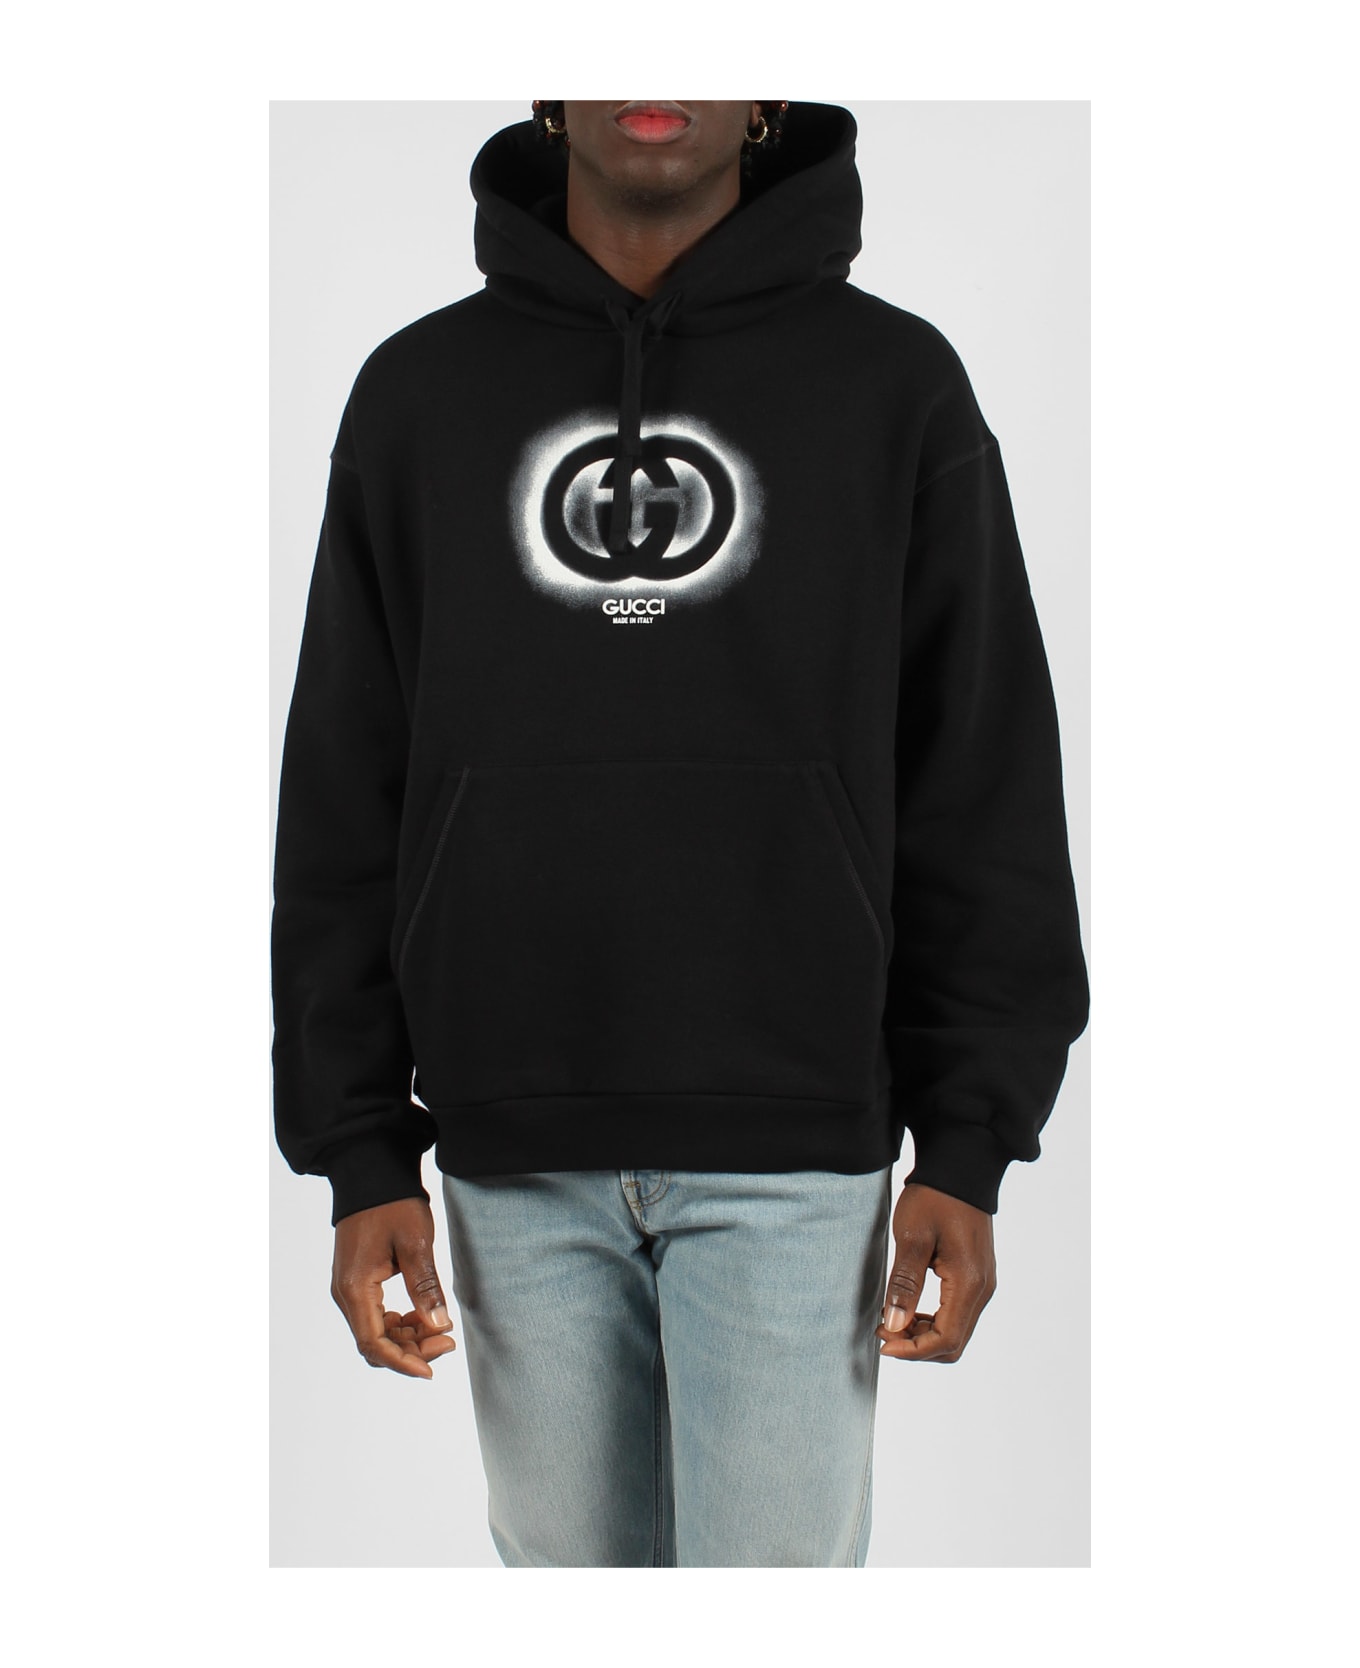 Gucci Cotton Jersey Hooded Sweatshirt - Black フリース